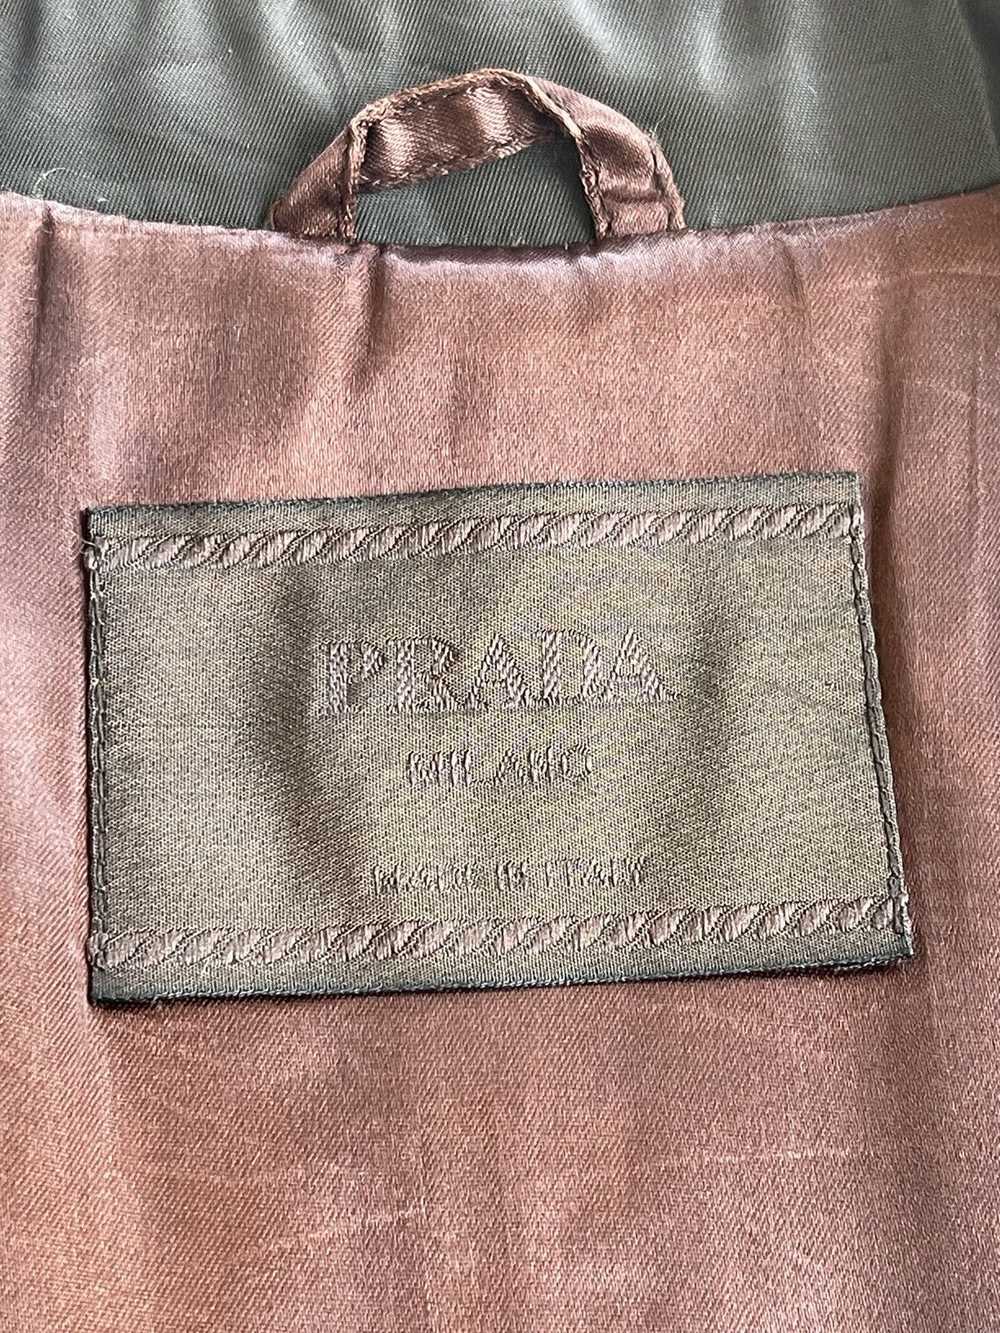 Prada Vintage Prada Belted Nylon Jacket - image 11